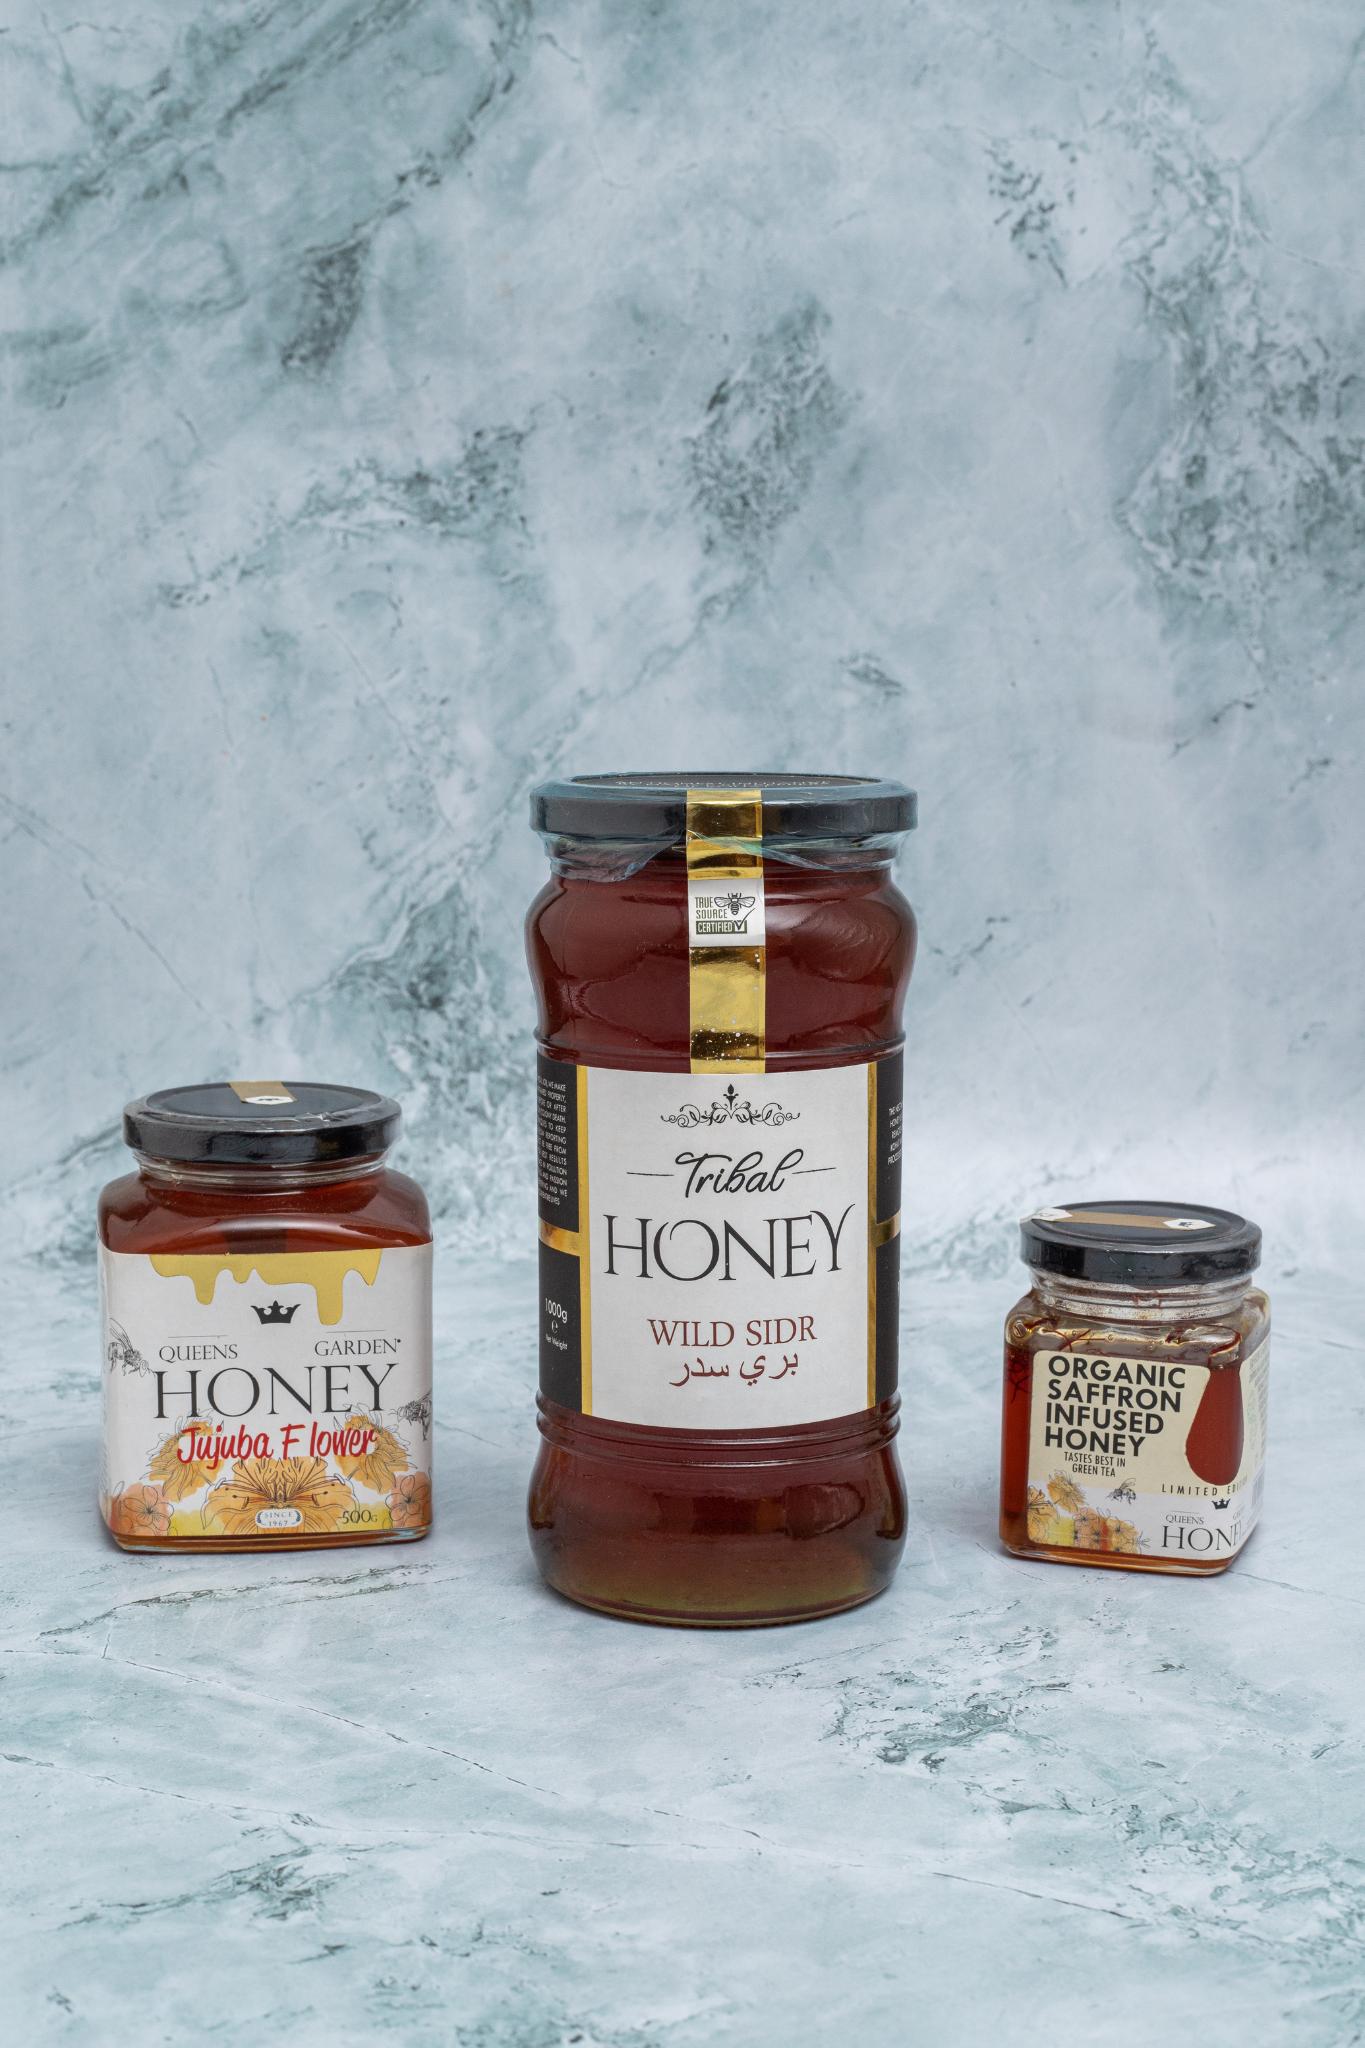 Organic Saffron Infused Honey